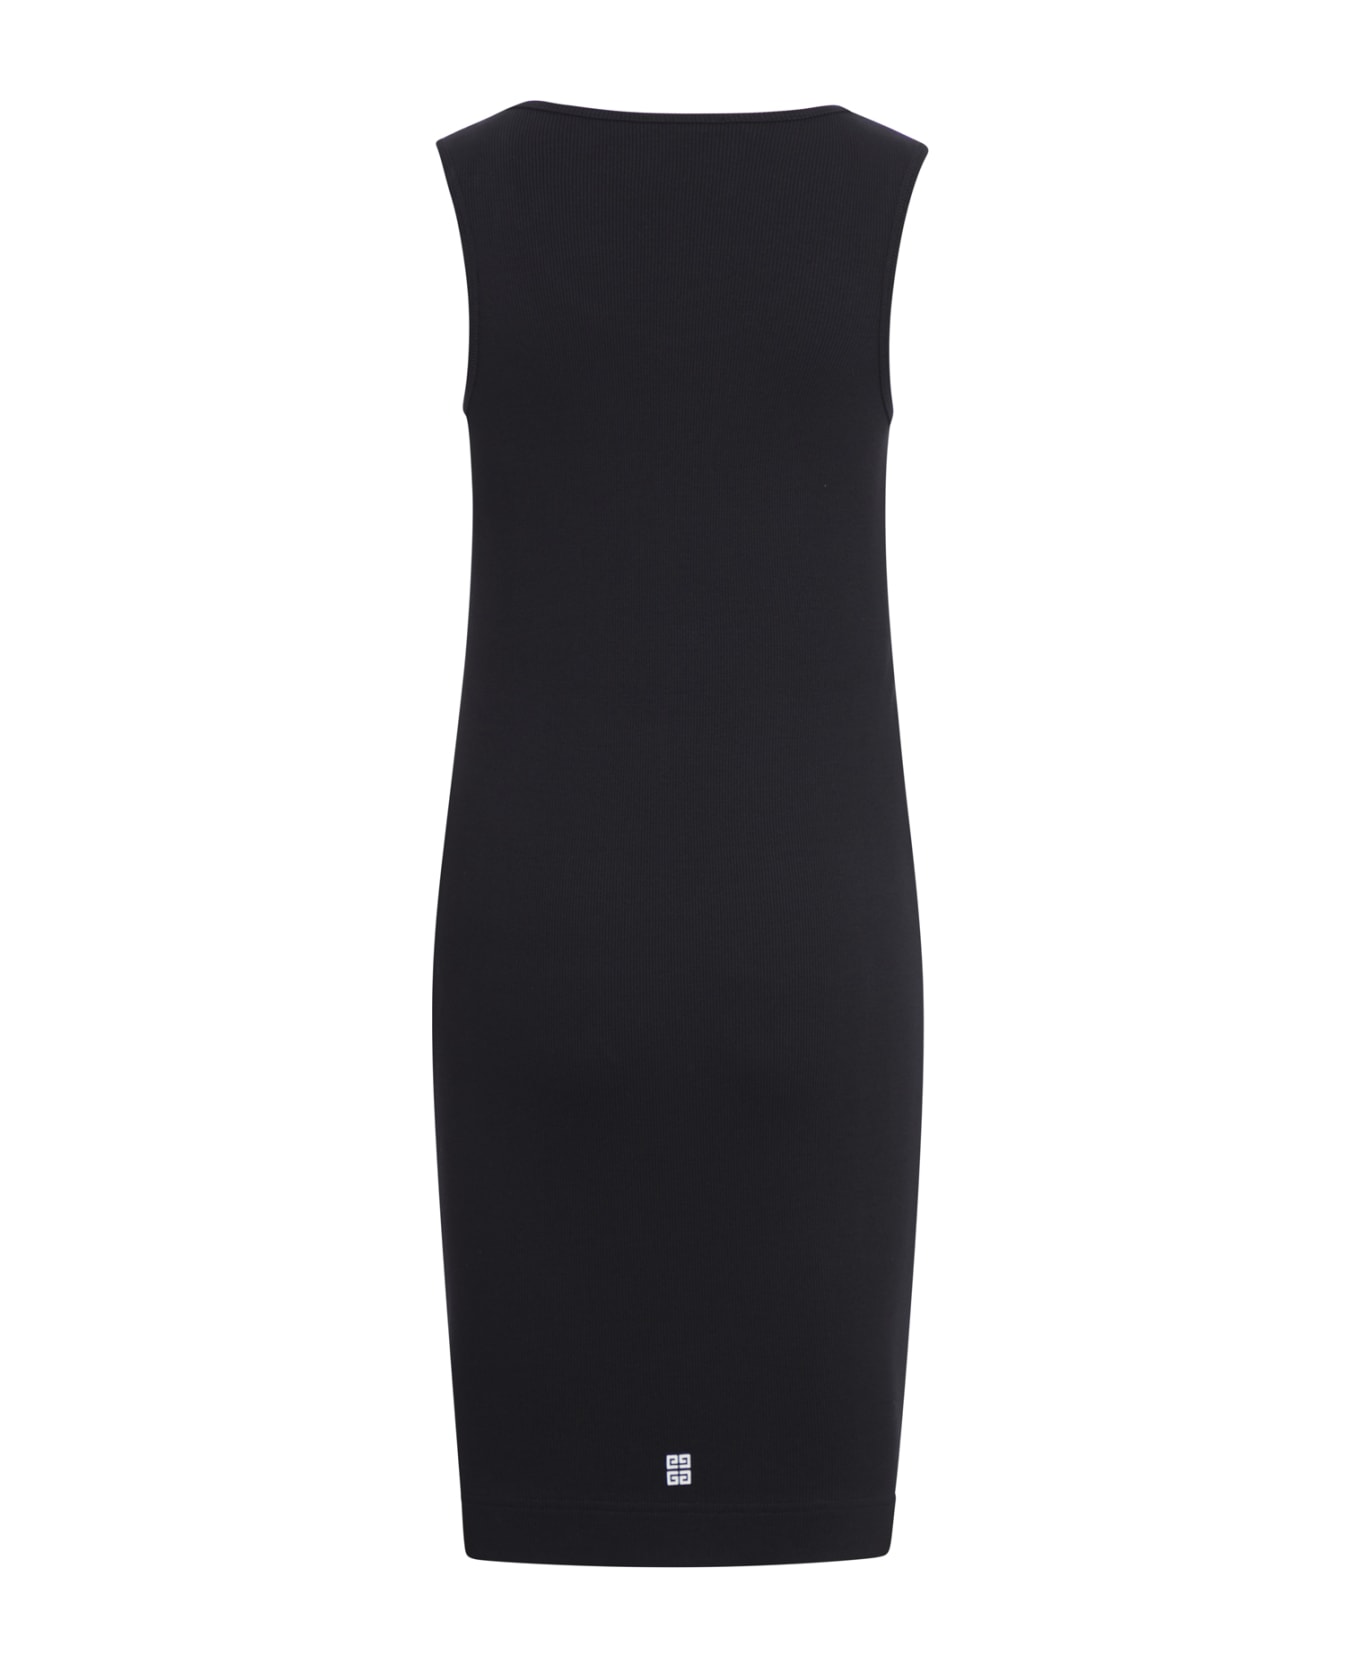 Givenchy Tank Top Mini Dress - Black